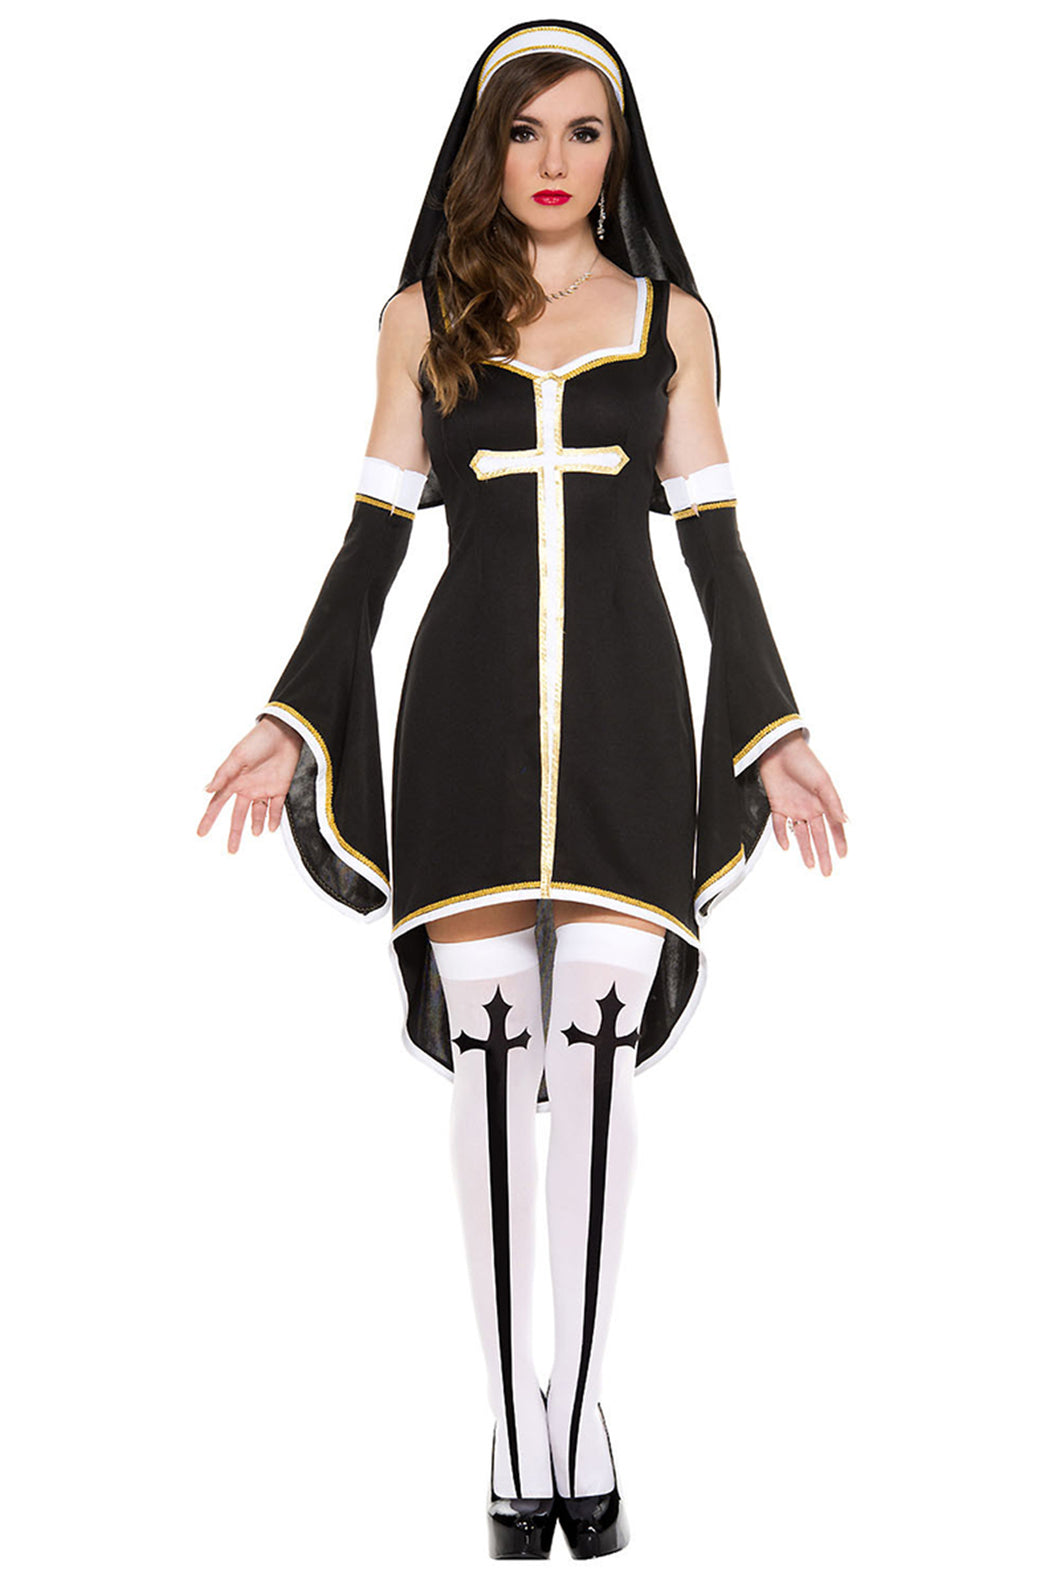 Sinfully Hot Nun Costume Set